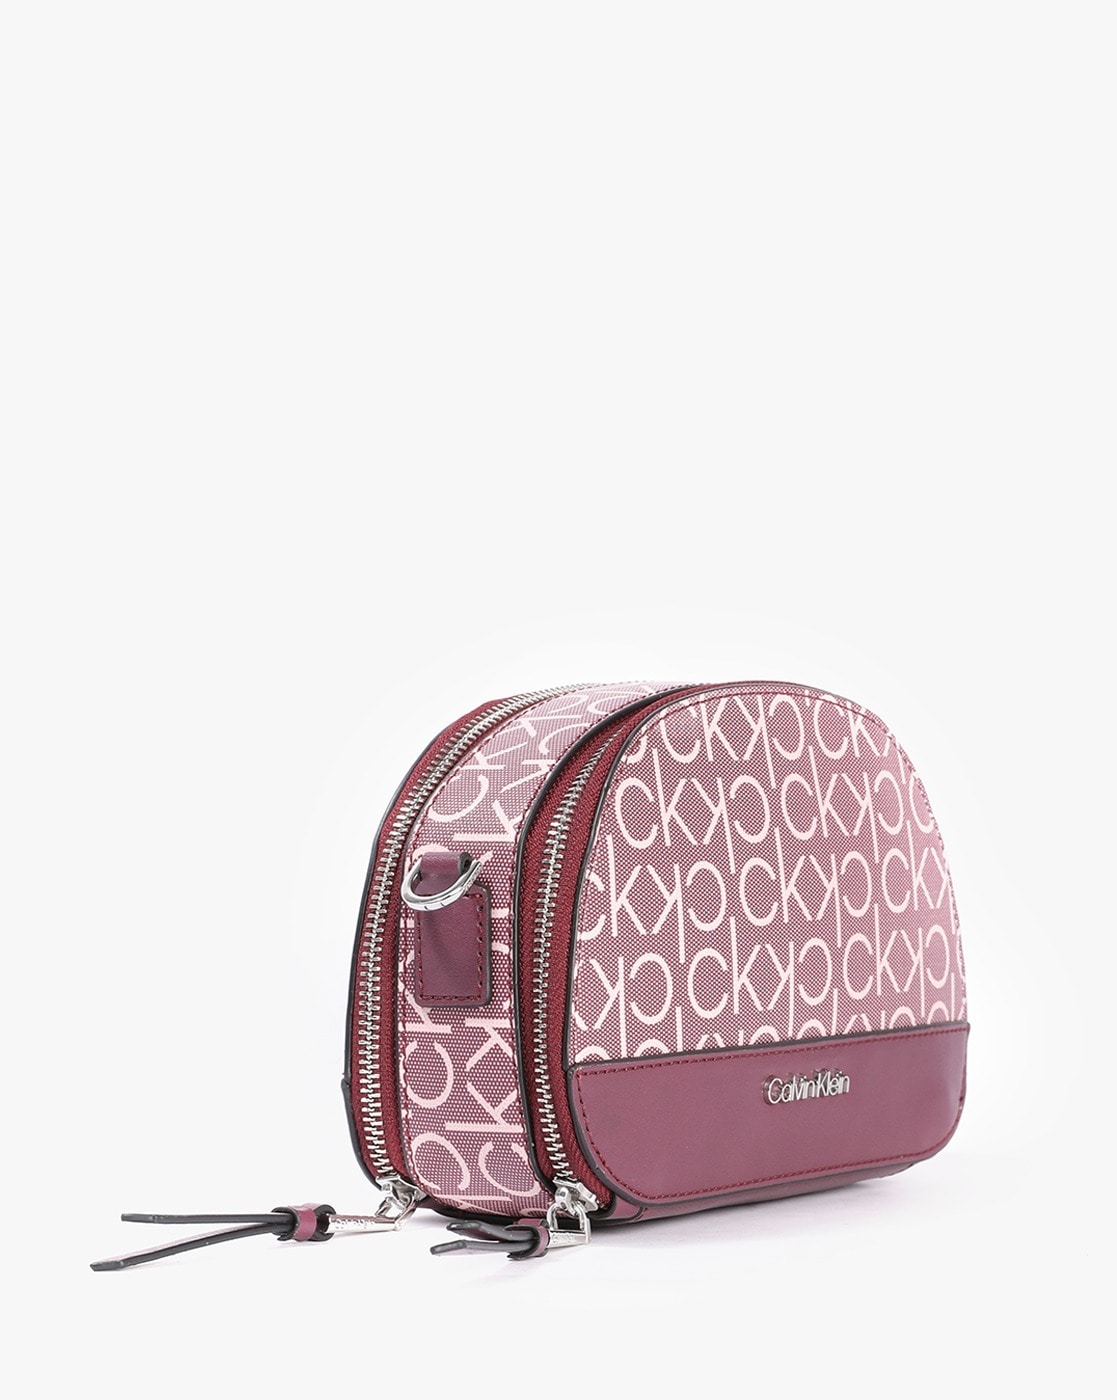 Calvin Klein Saddle Bag Saffiano Crossbody Purple Handbag GOLD Chain Purse  | eBay